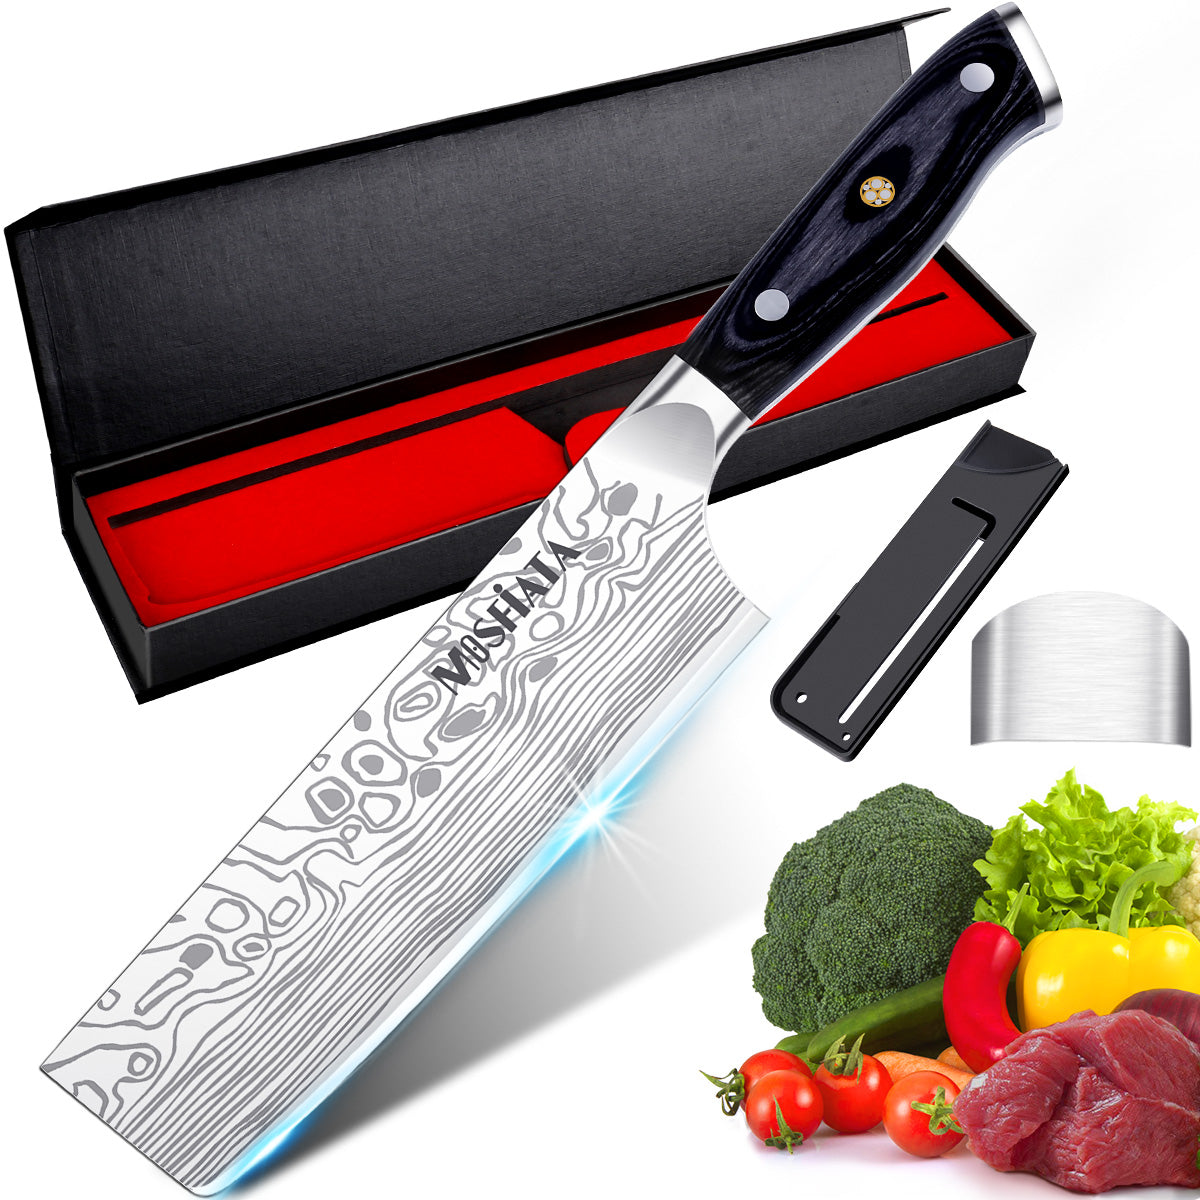 MOSFIATA-8 Super Sharp Professional Chef's Knife Finger Guard